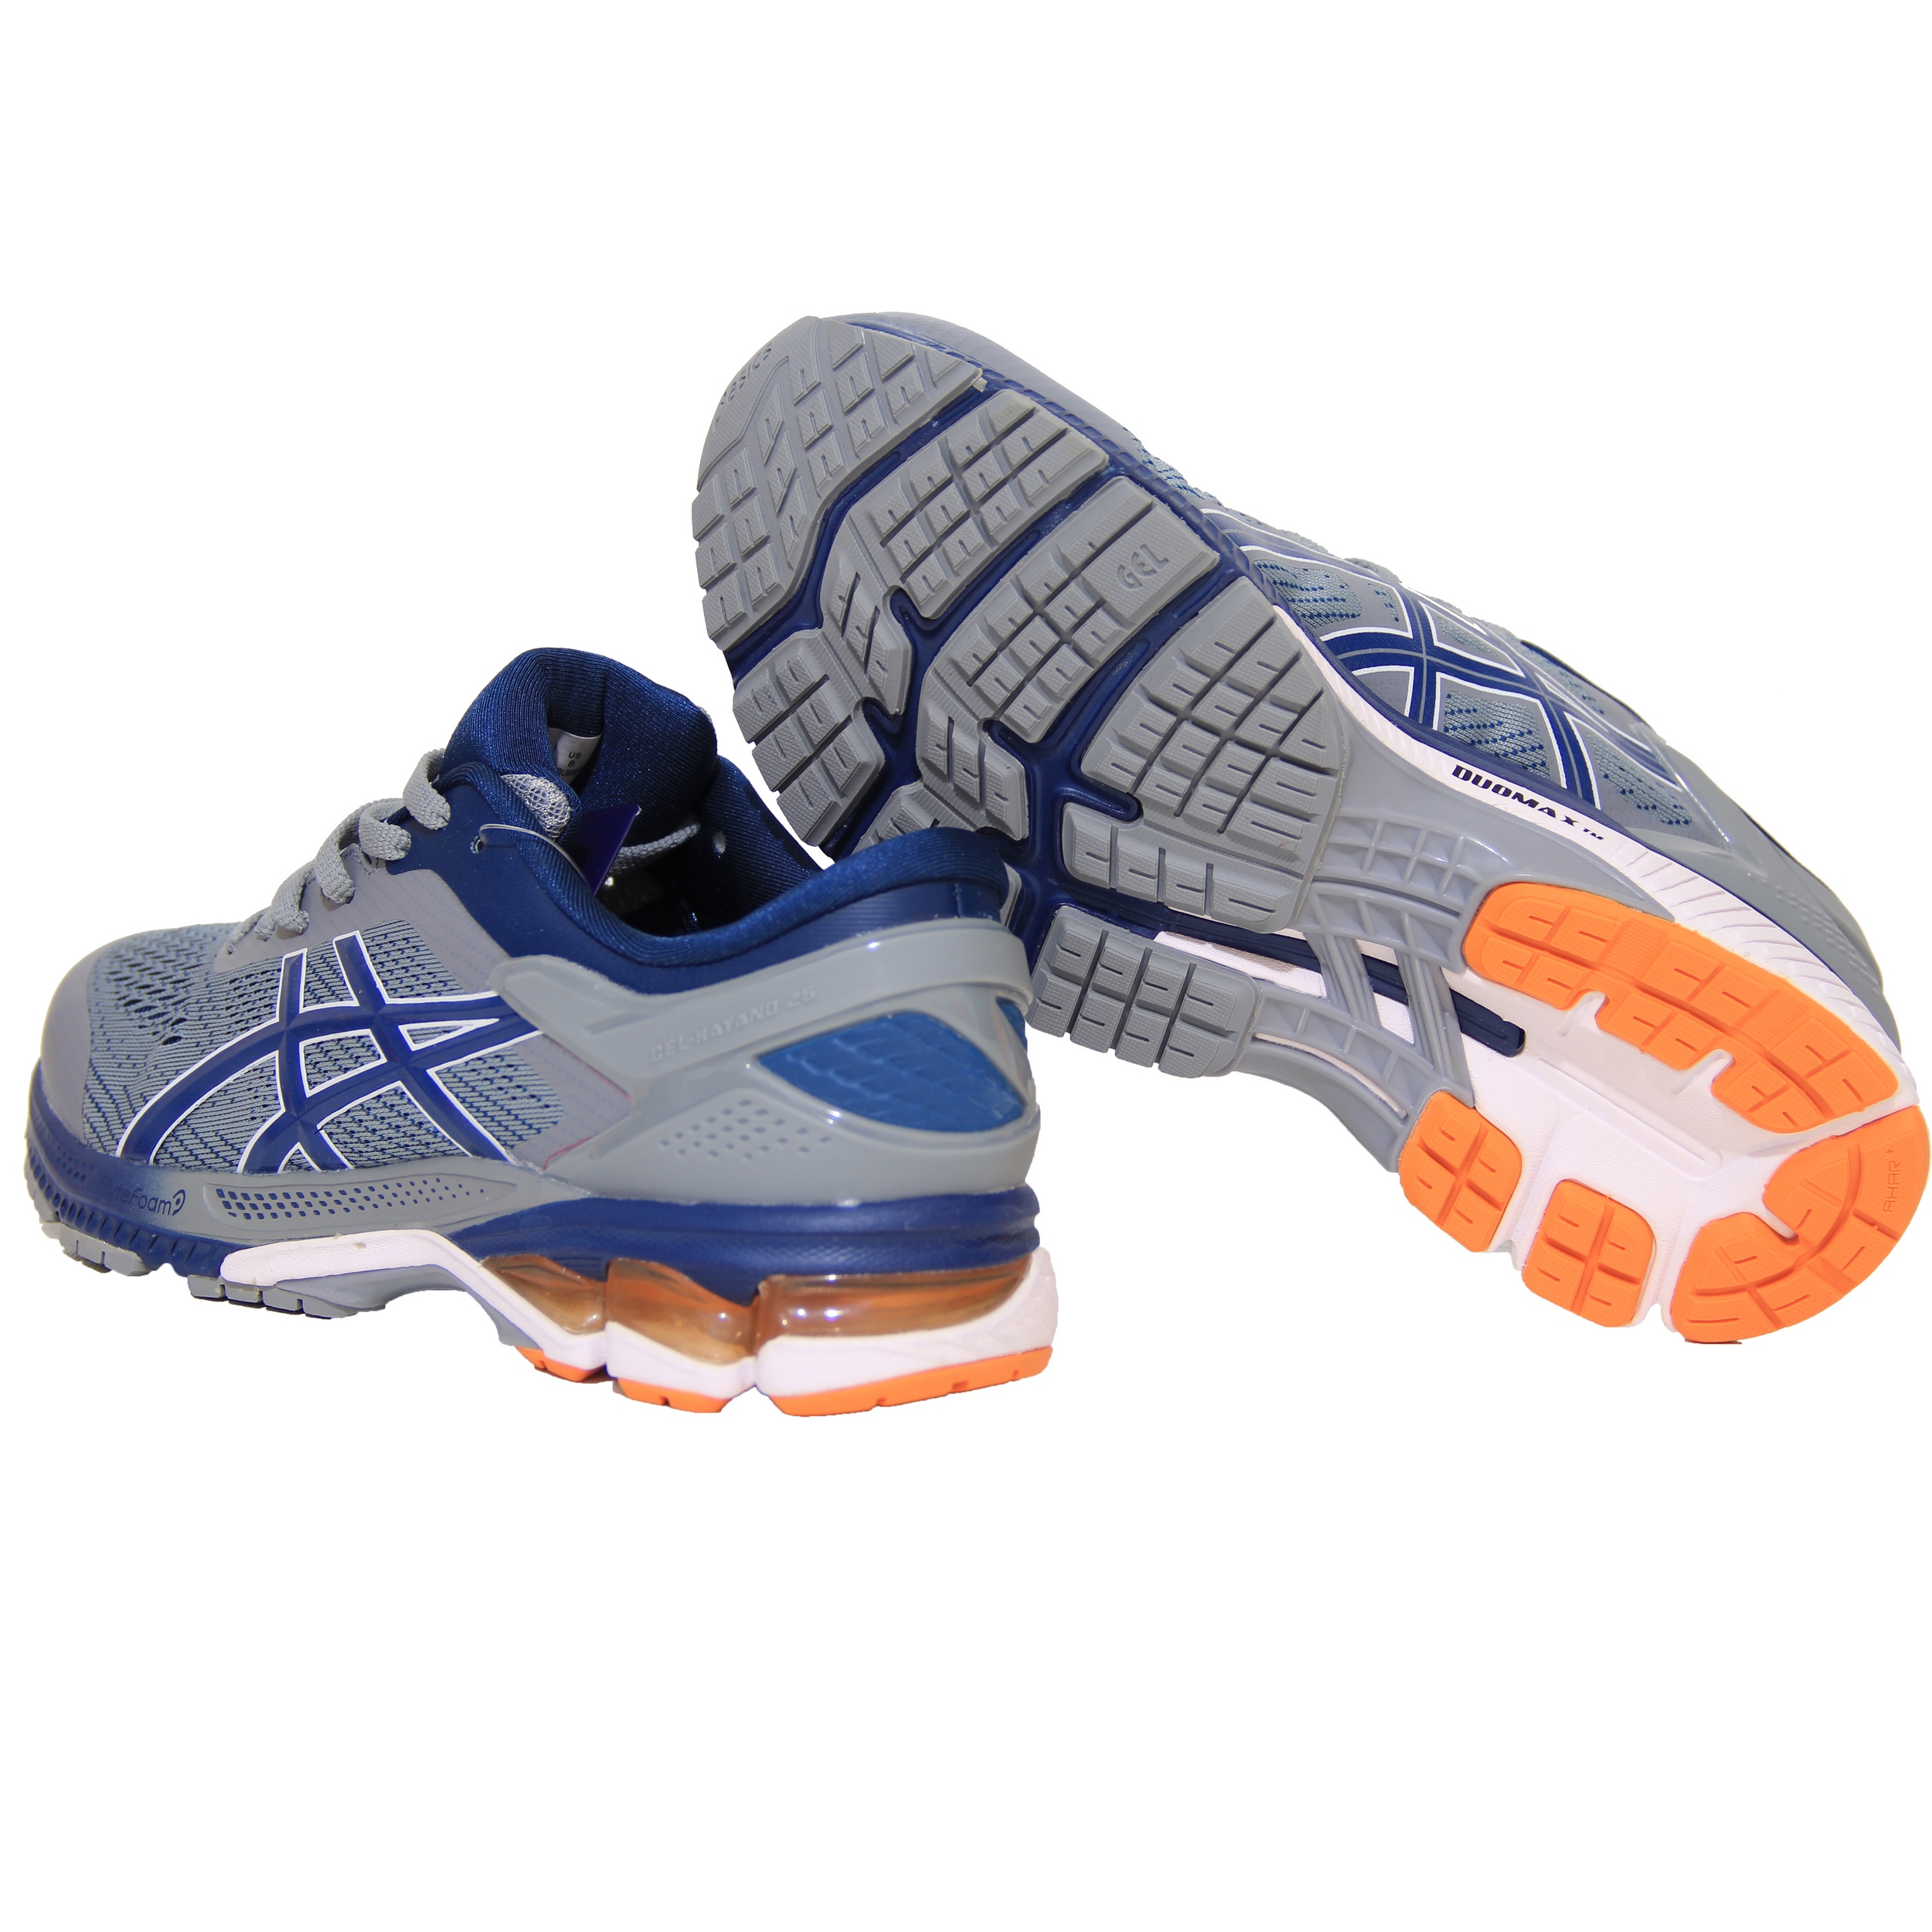 کفش مخصوص دویدن مردانه اسیکس مدل Gel-kayano 26